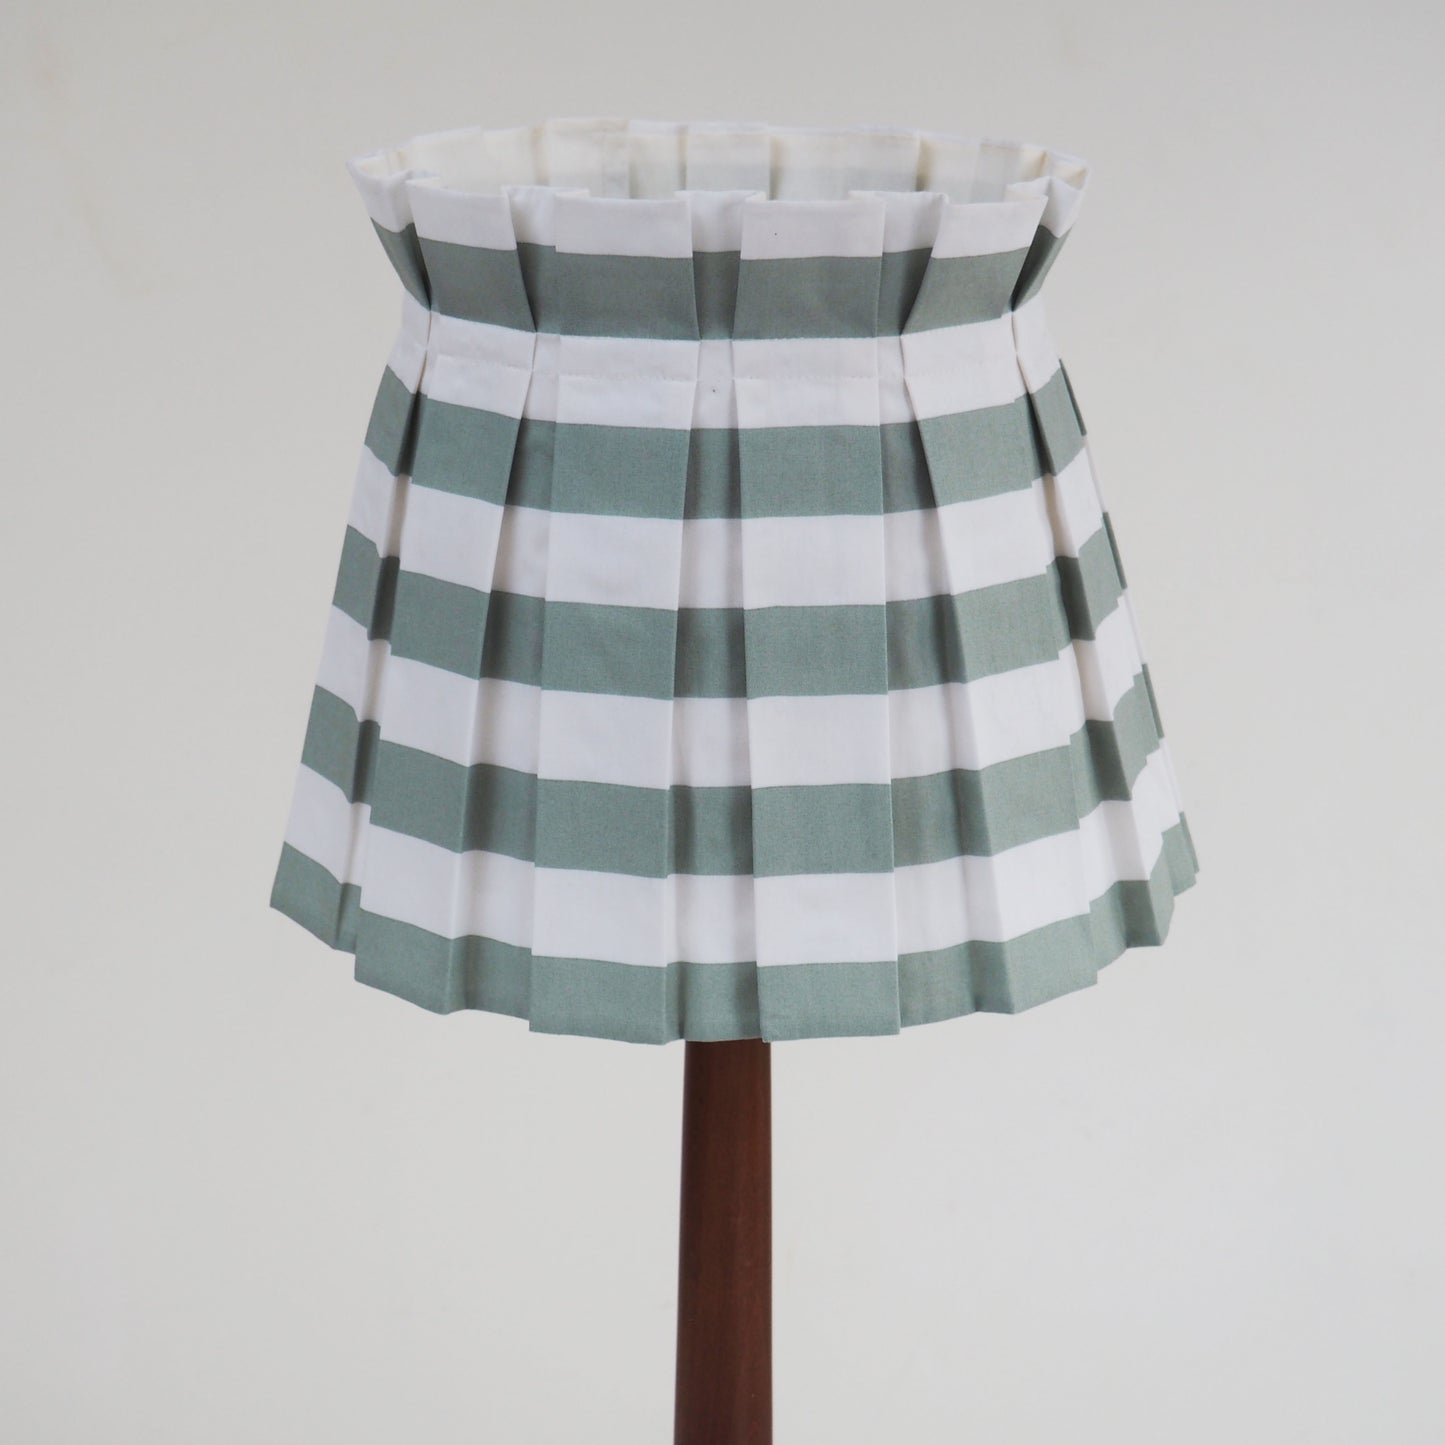 MEDIUM box pleat sage green and white stripe fabric lampshade